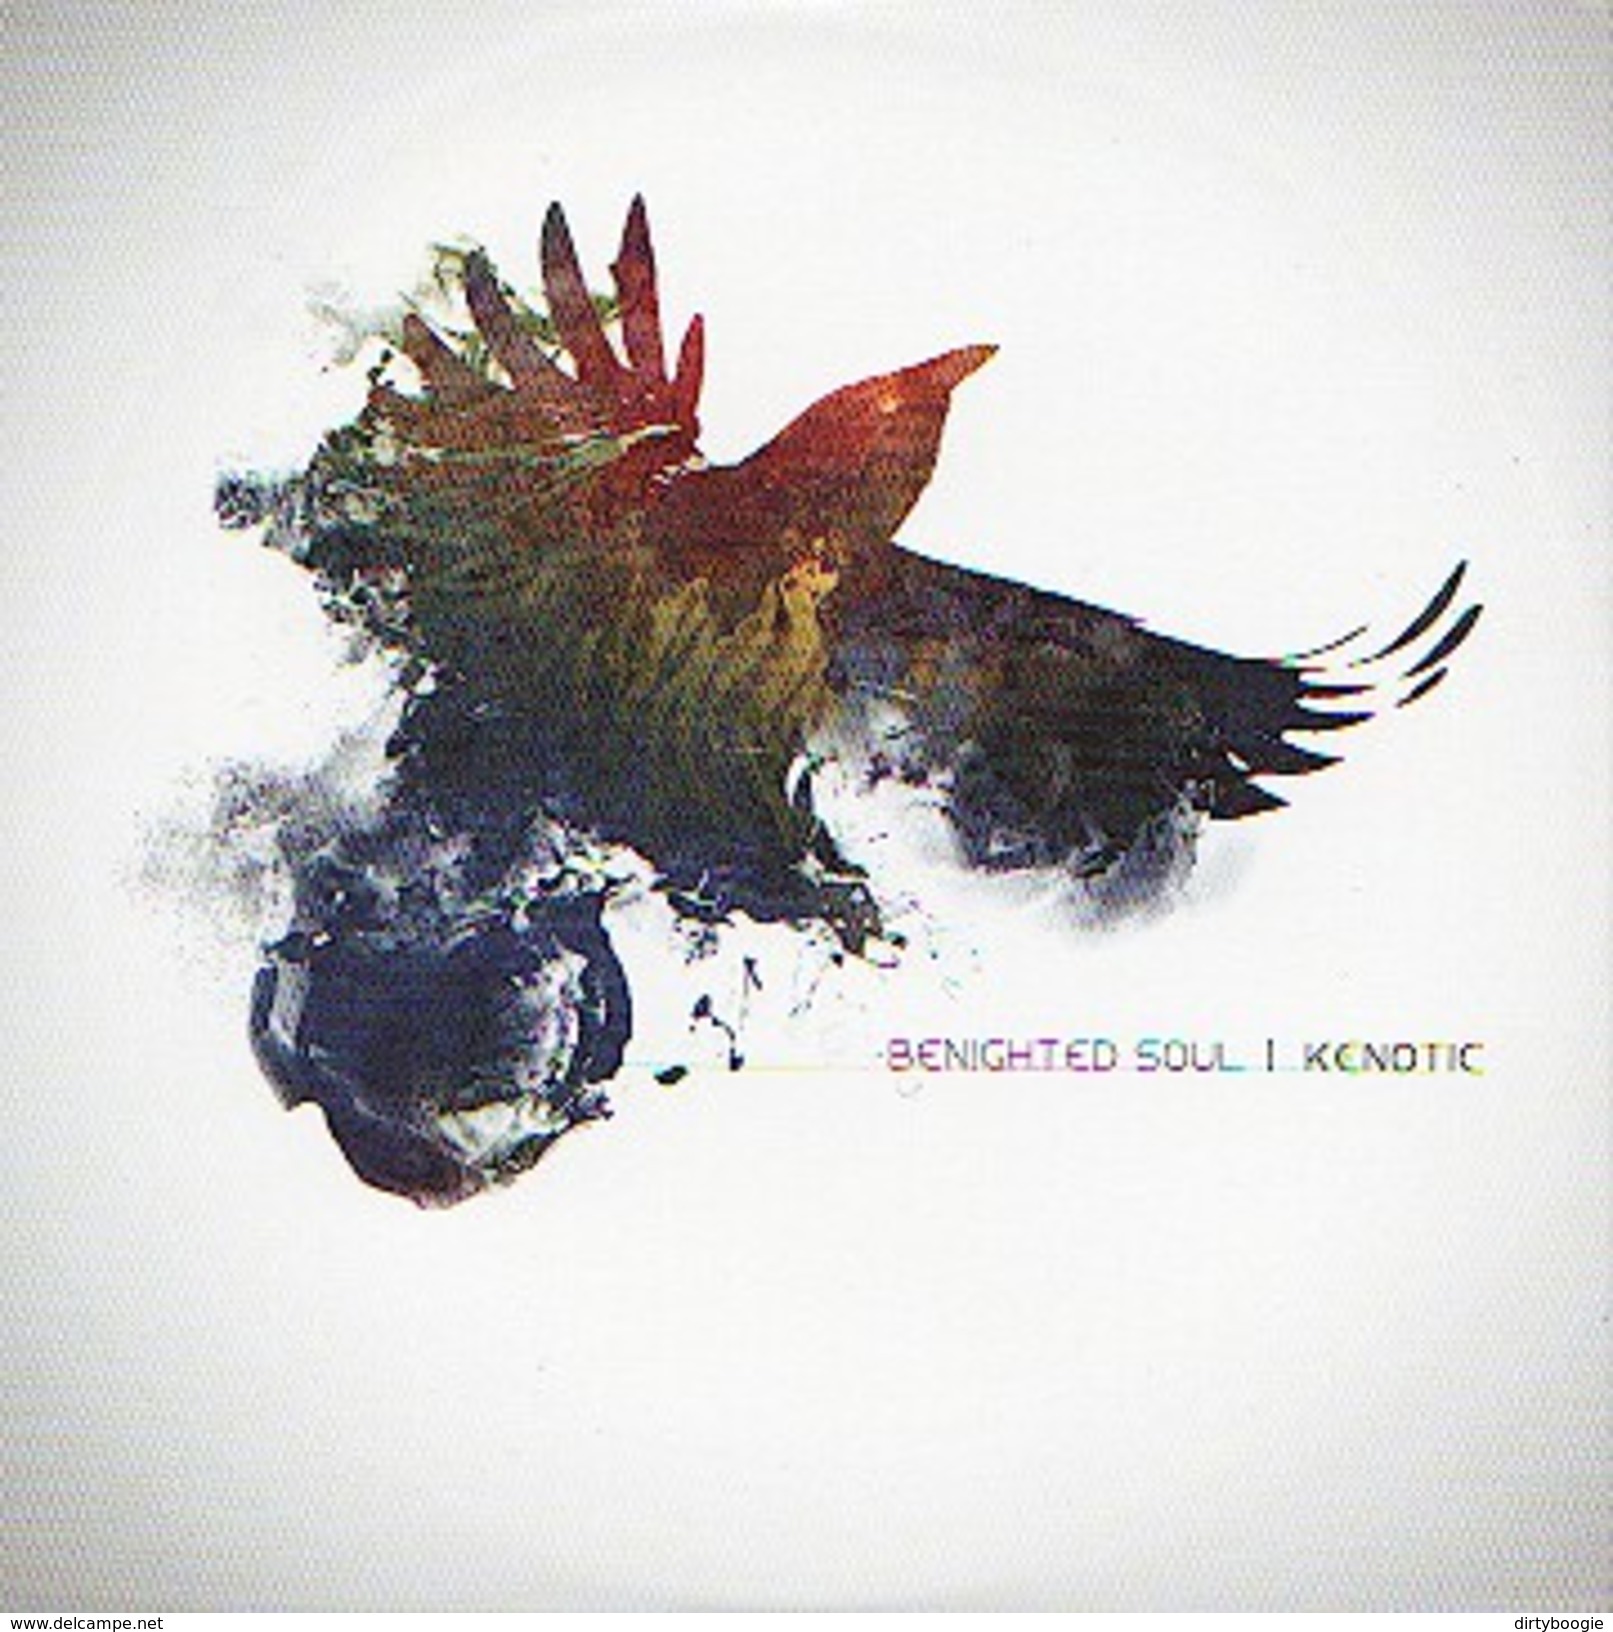 BENIGHTED SOUL - Kenotic - CD - METAL SYMPHONIQUE - Hard Rock En Metal